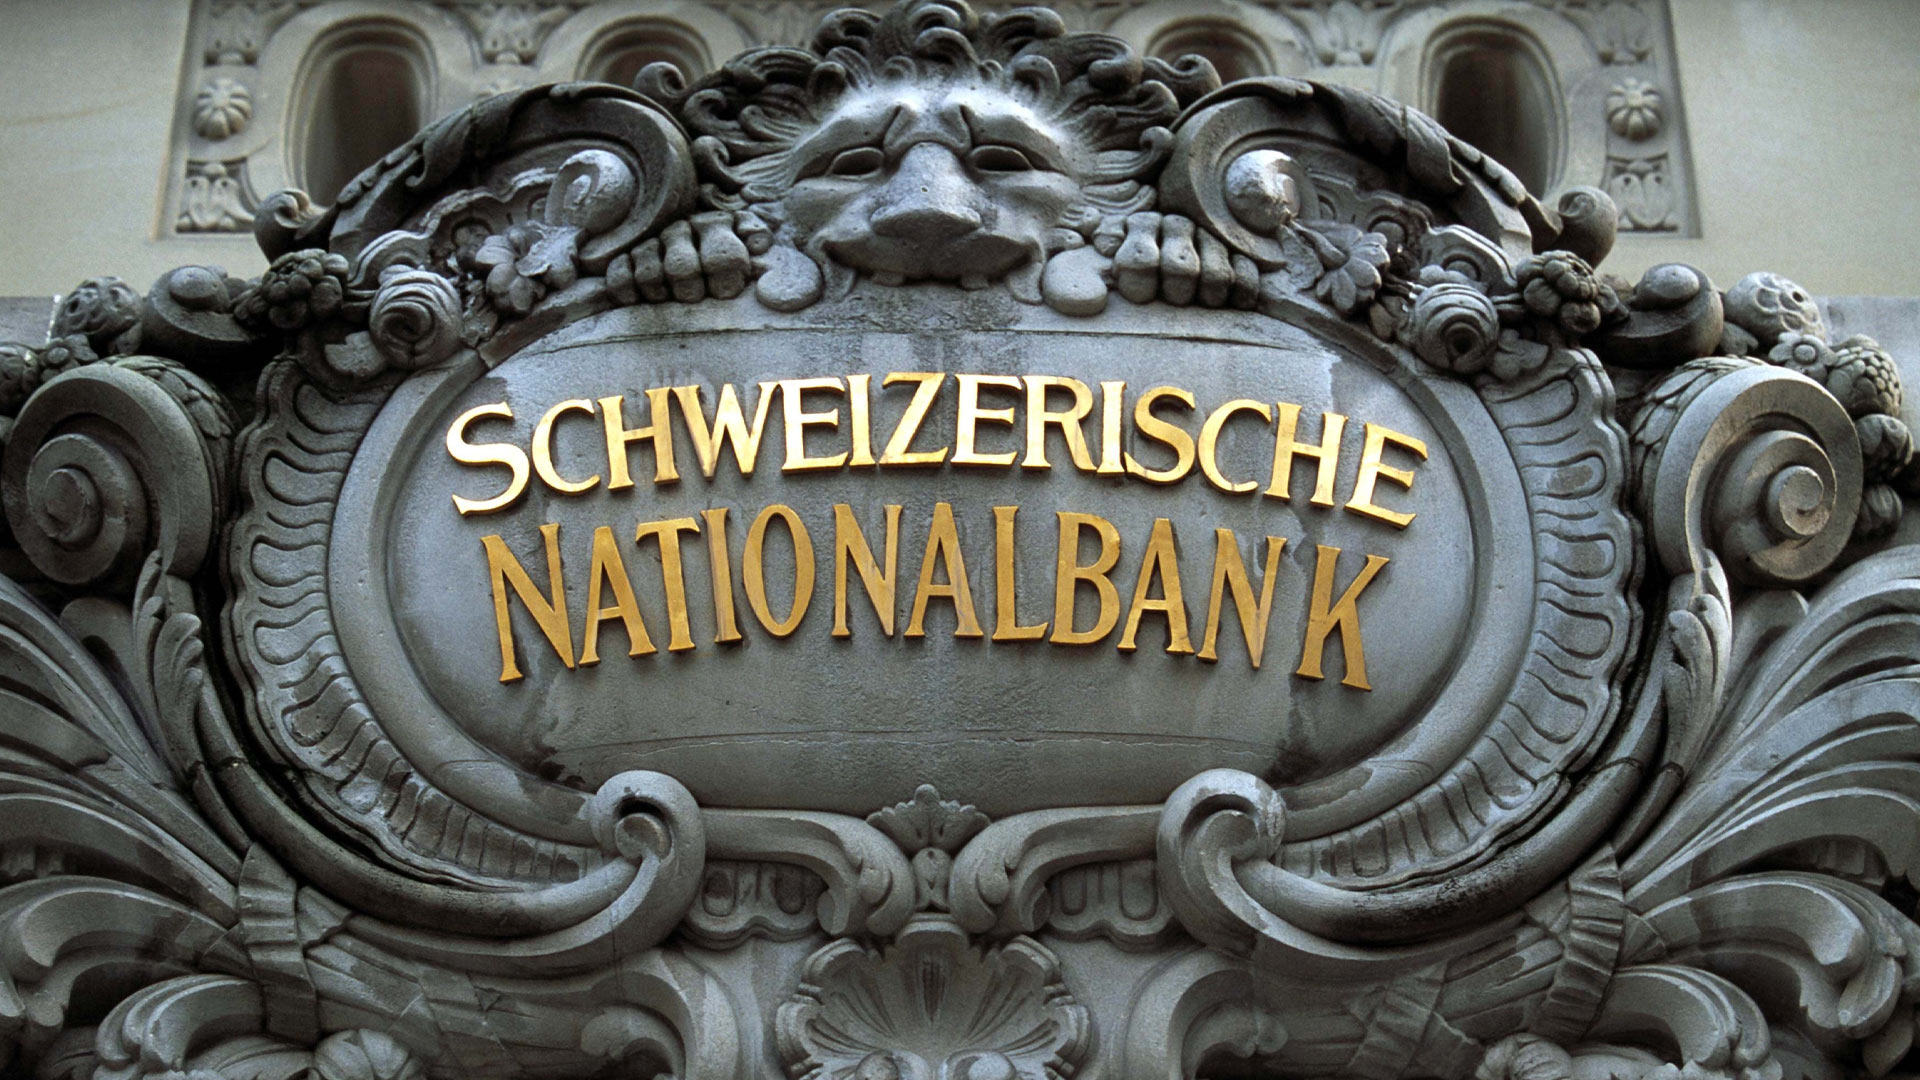 Schweizer Nationalbank Bern | picture-alliance / dpa